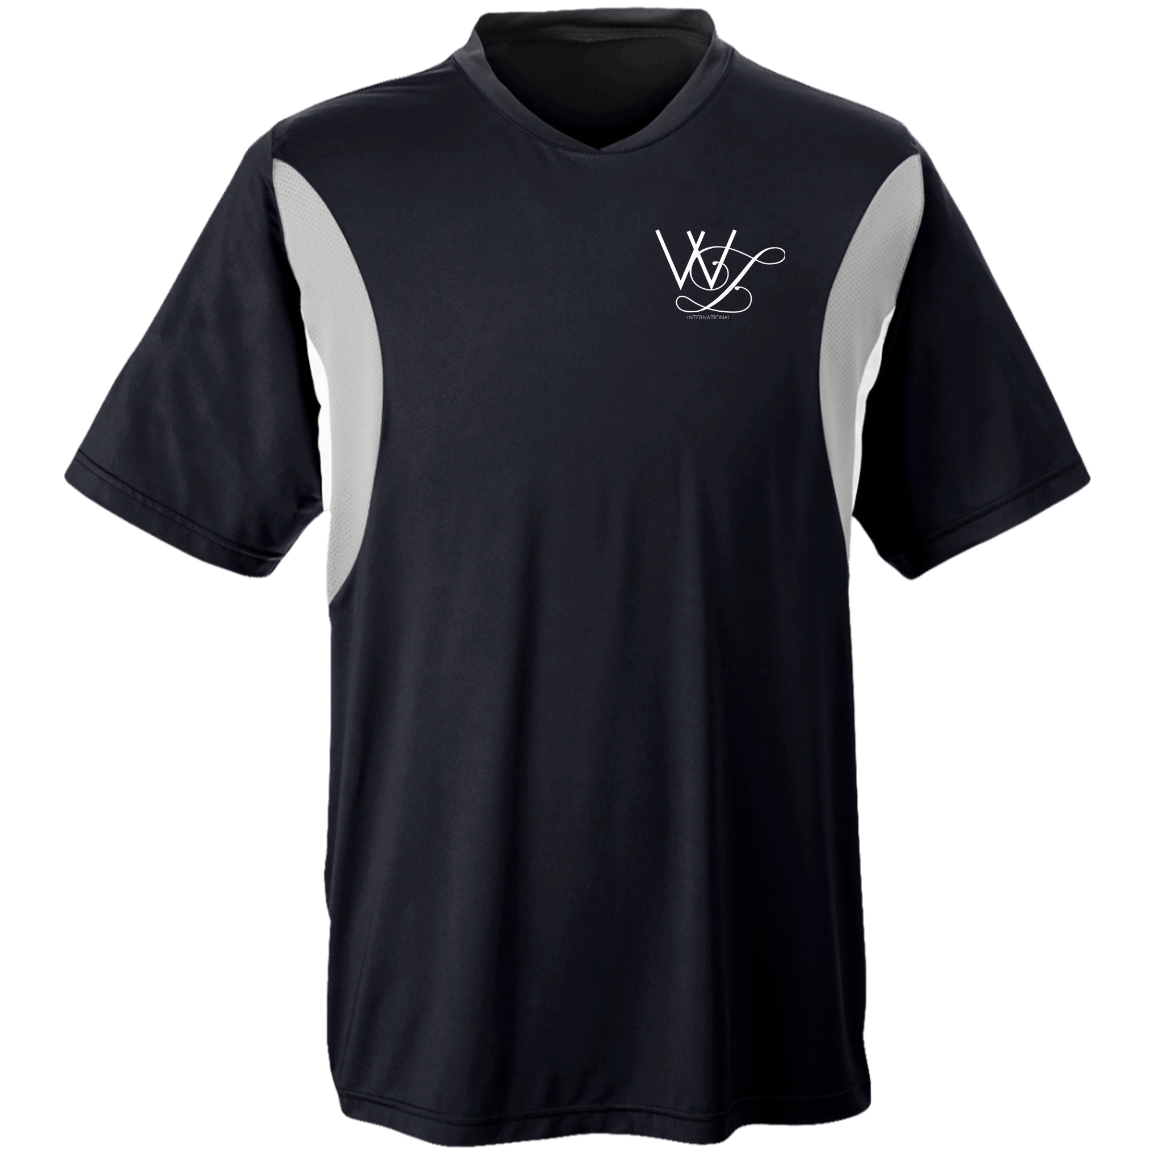 WL Logo - William Louis All Sport Jersey. Men Jersey Online. Designer